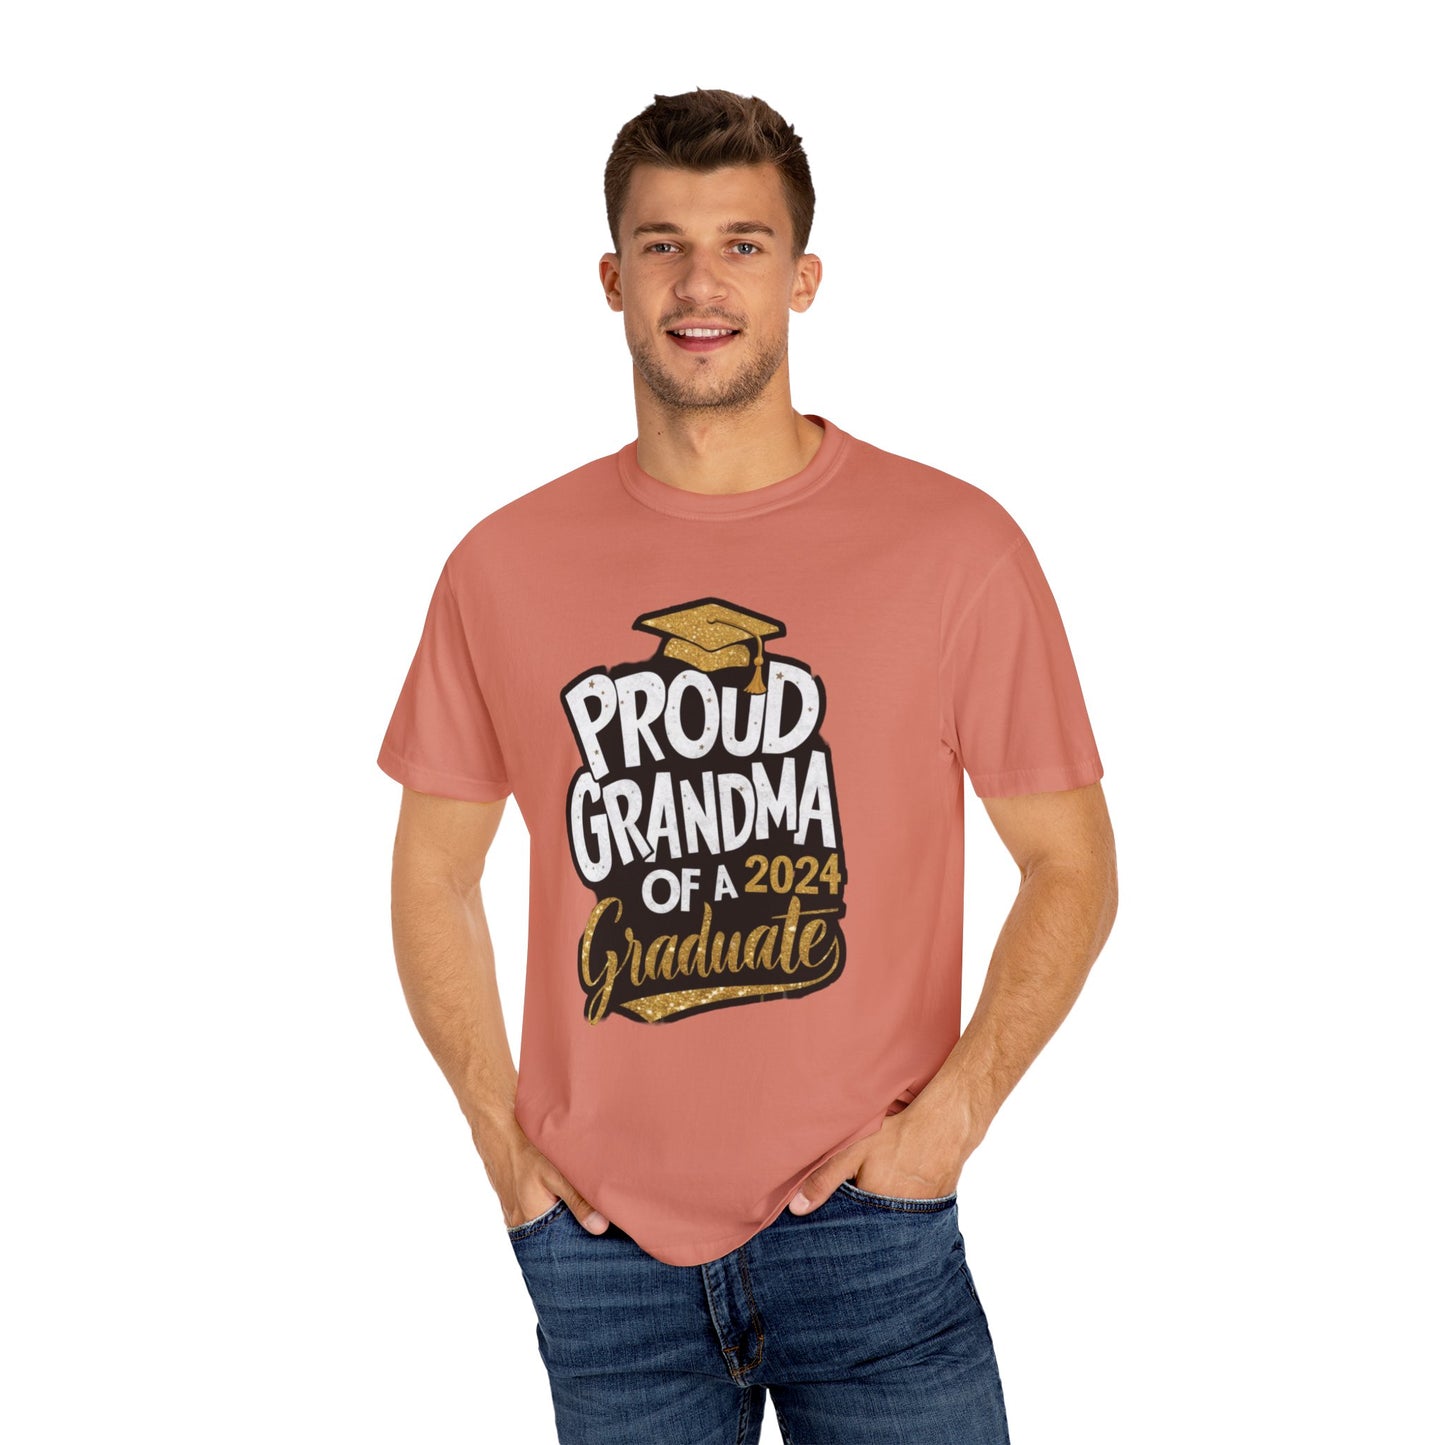 Proud of Grandma 2024 Graduate Unisex Garment-dyed T-shirt Cotton Funny Humorous Graphic Soft Premium Unisex Men Women Terracotta T-shirt Birthday Gift-57